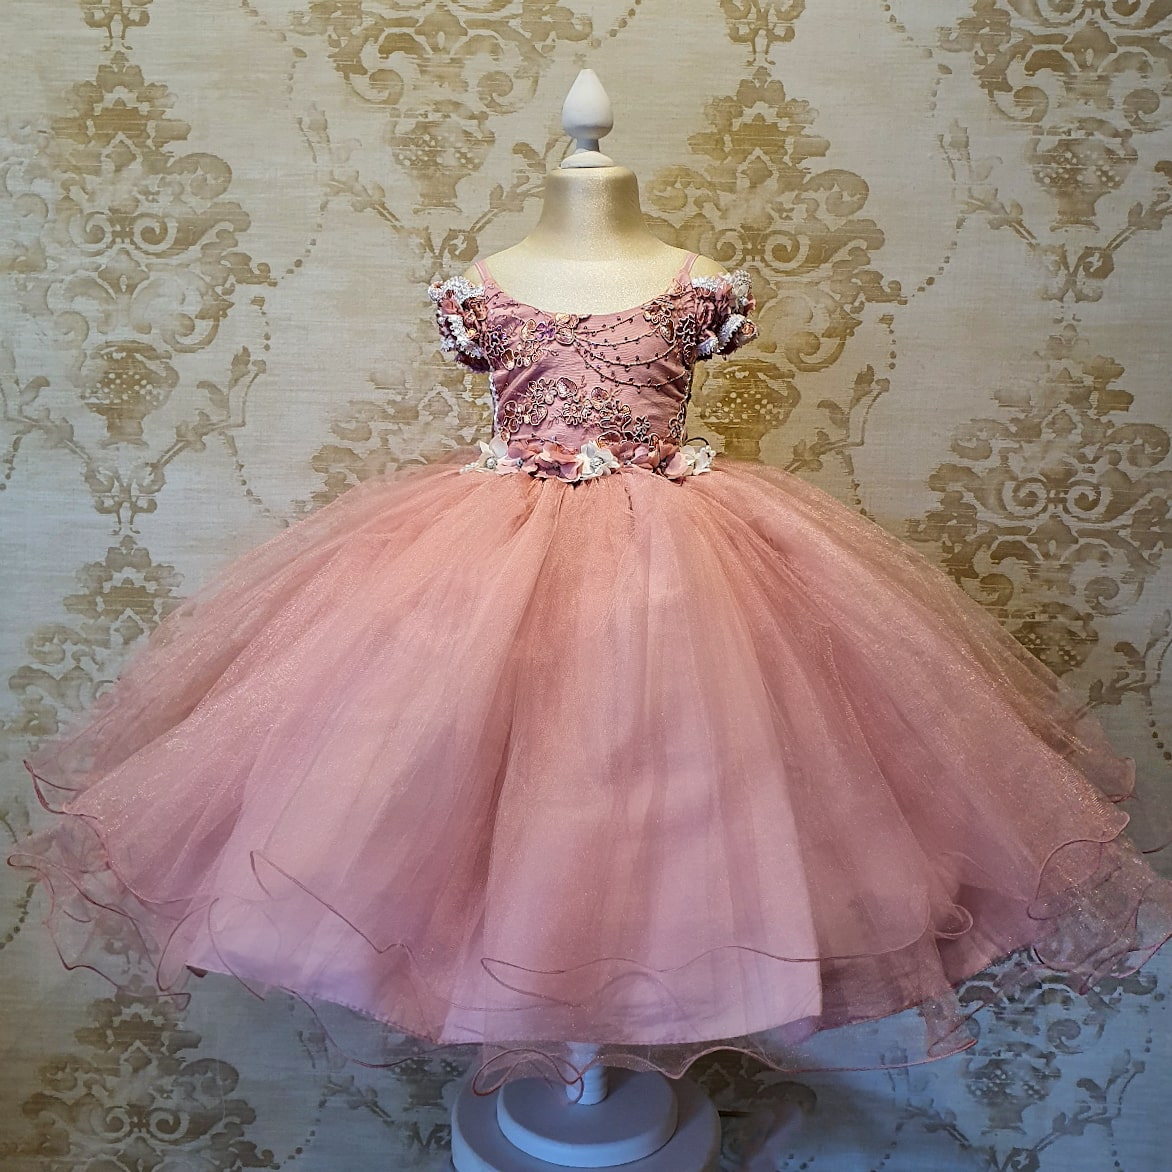 Vestido de Niña Fiesta Rosa con Flores Presentación Tallas 2 a Años -